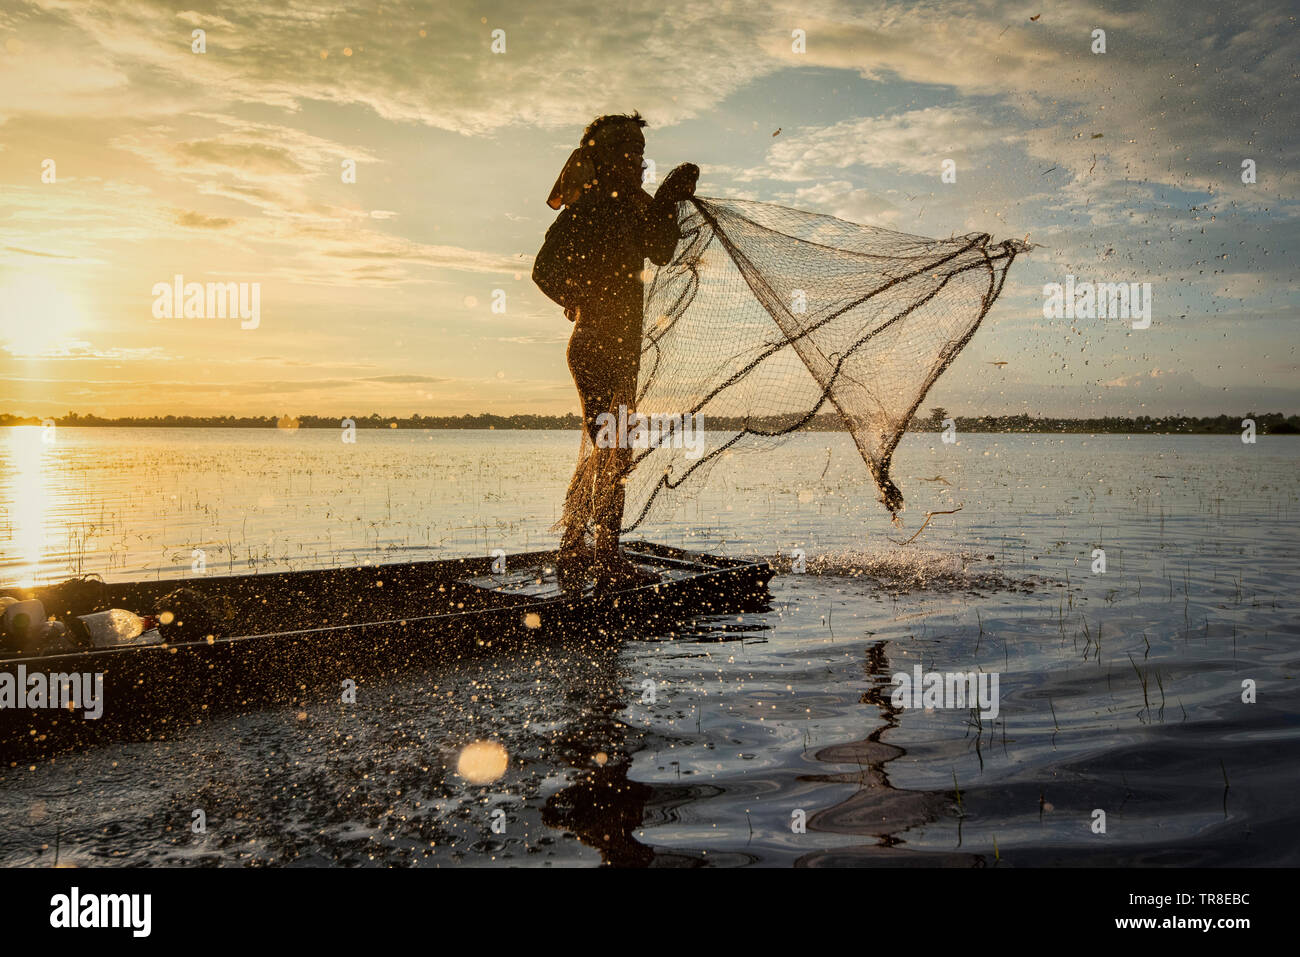 Asia fisherman using net fishing on wooden boat casting net sunset